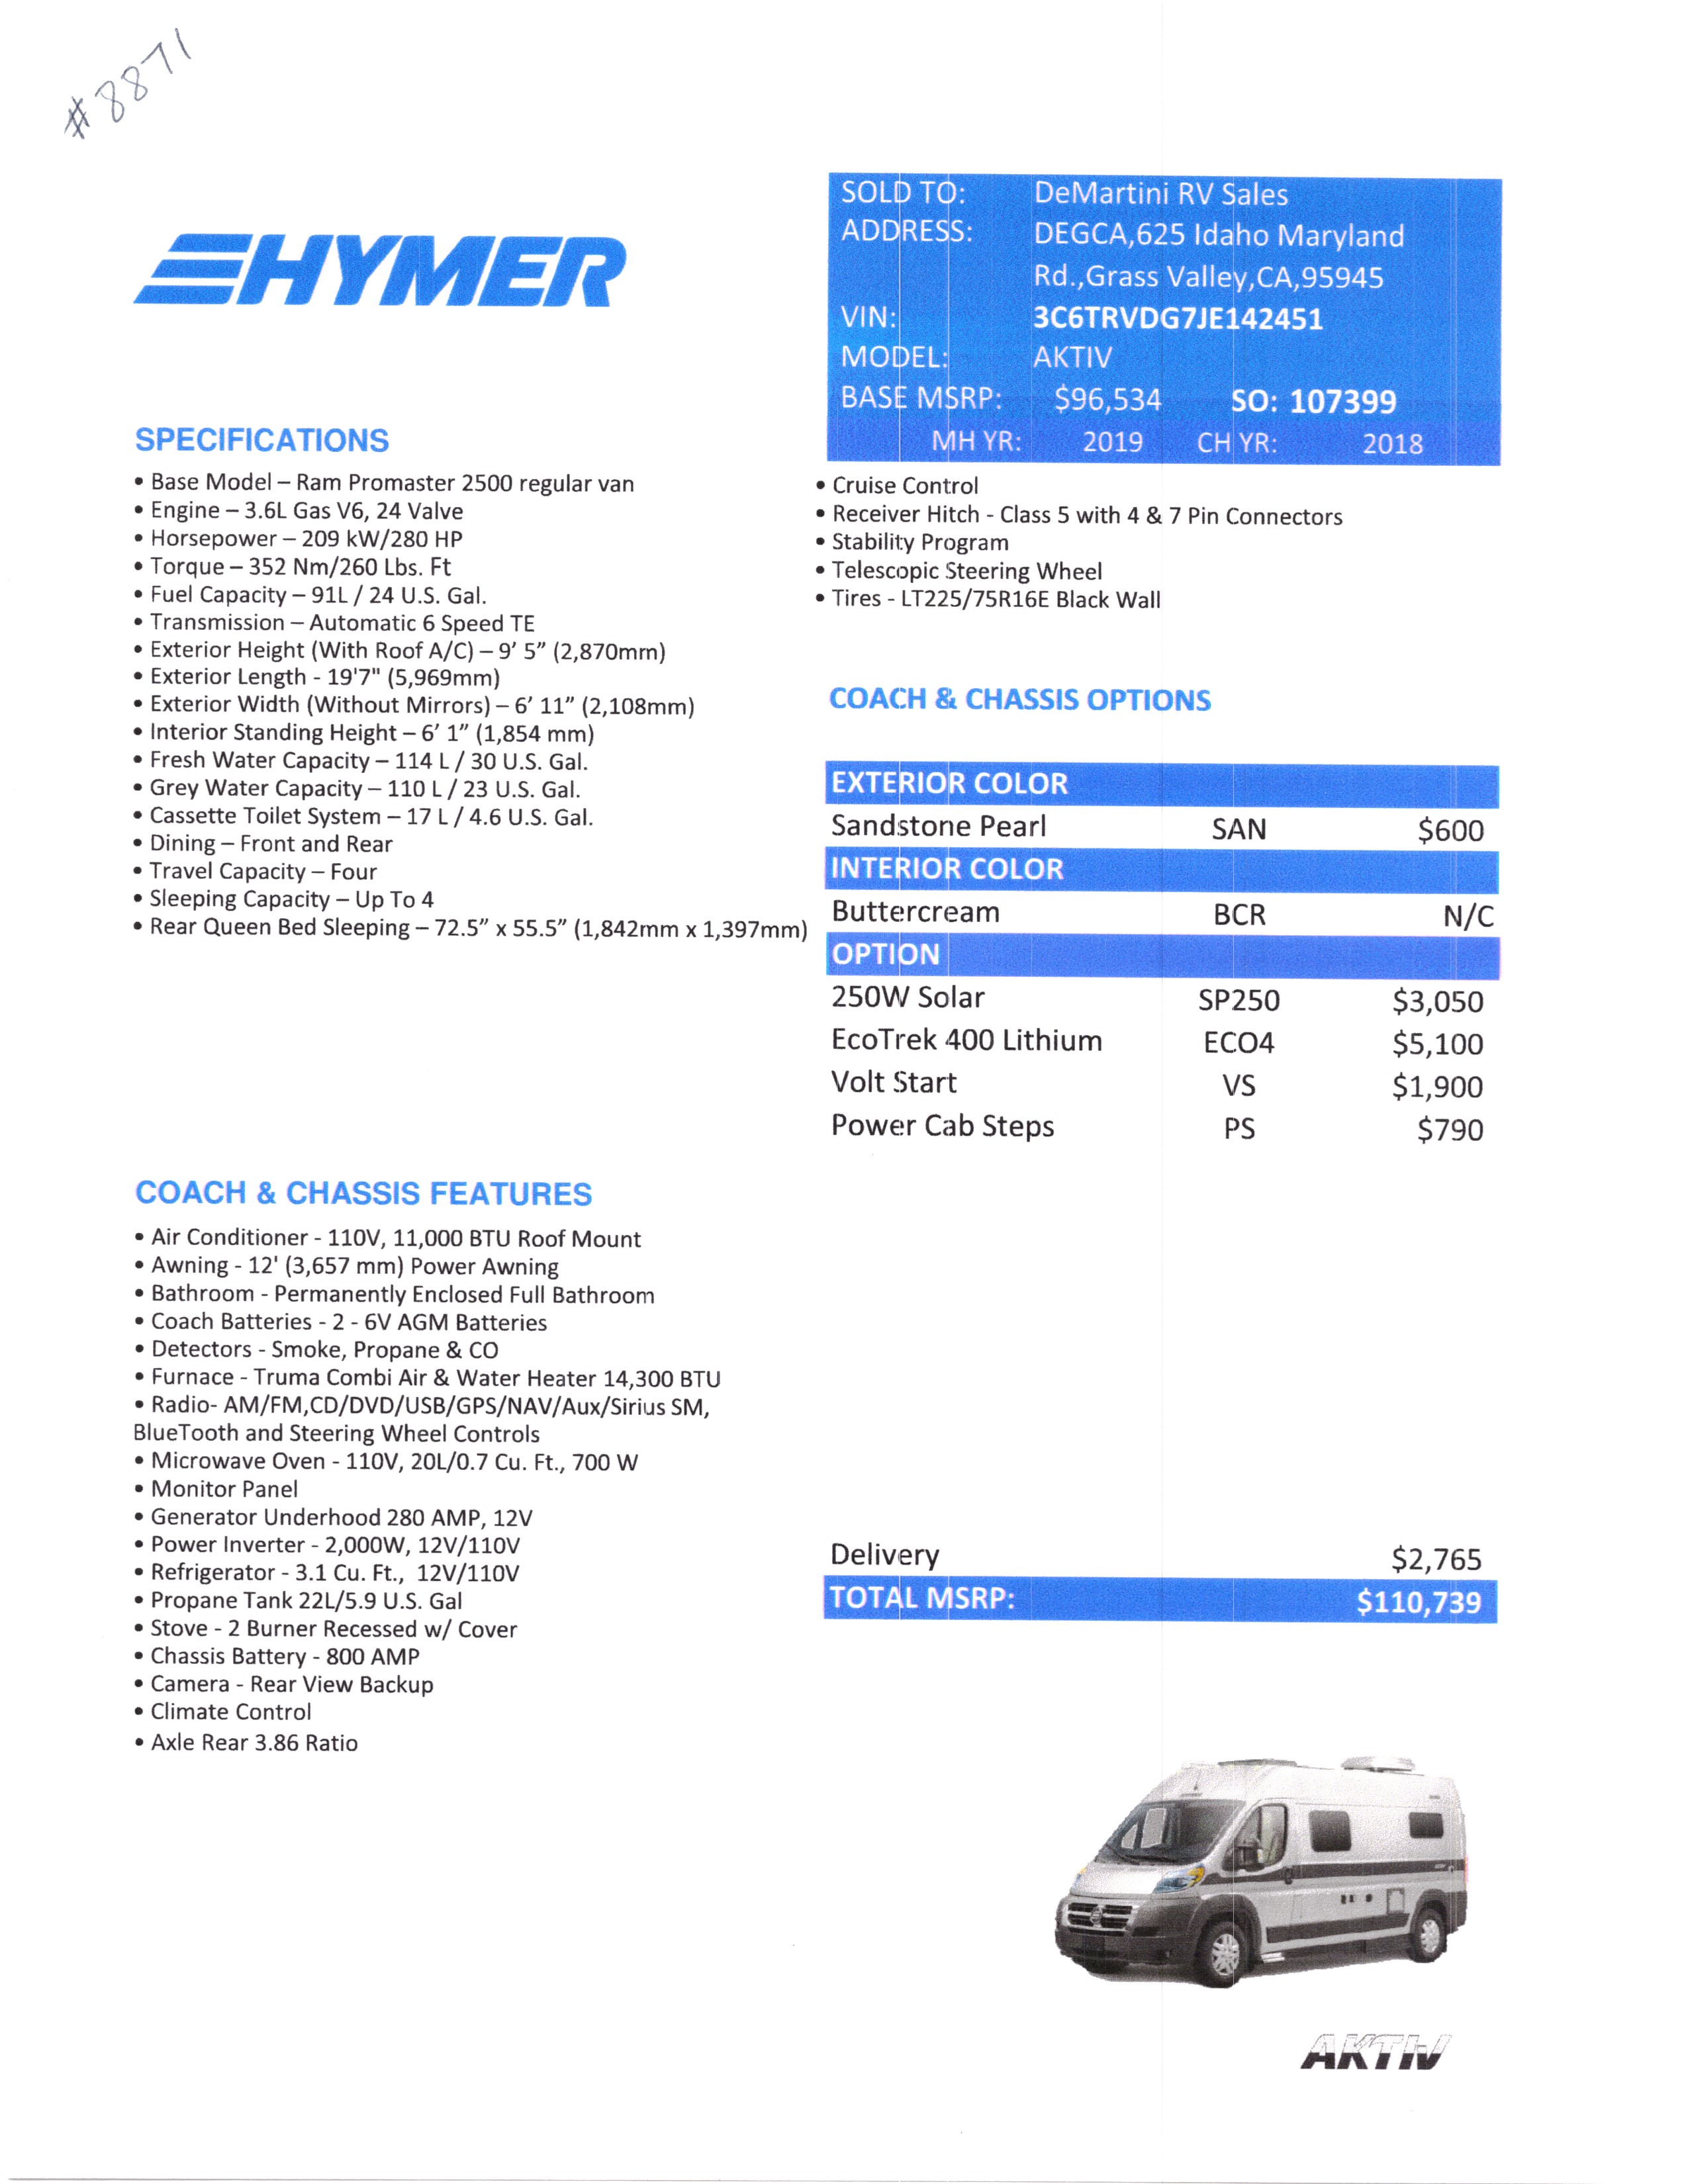 2019 Hymer Aktiv MSRP Sheet